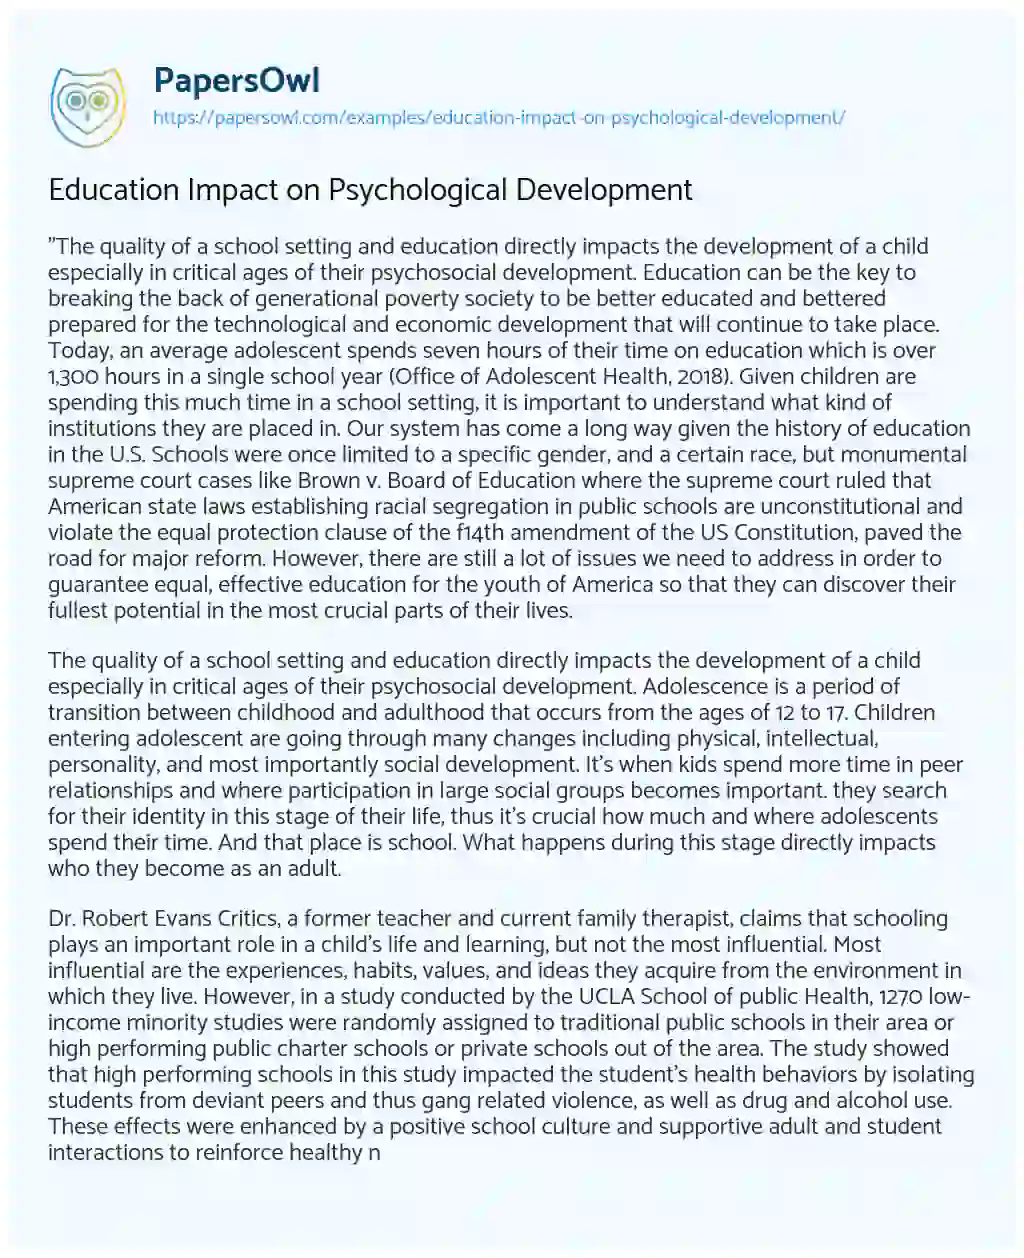 Education Impact on Psychological Development essay